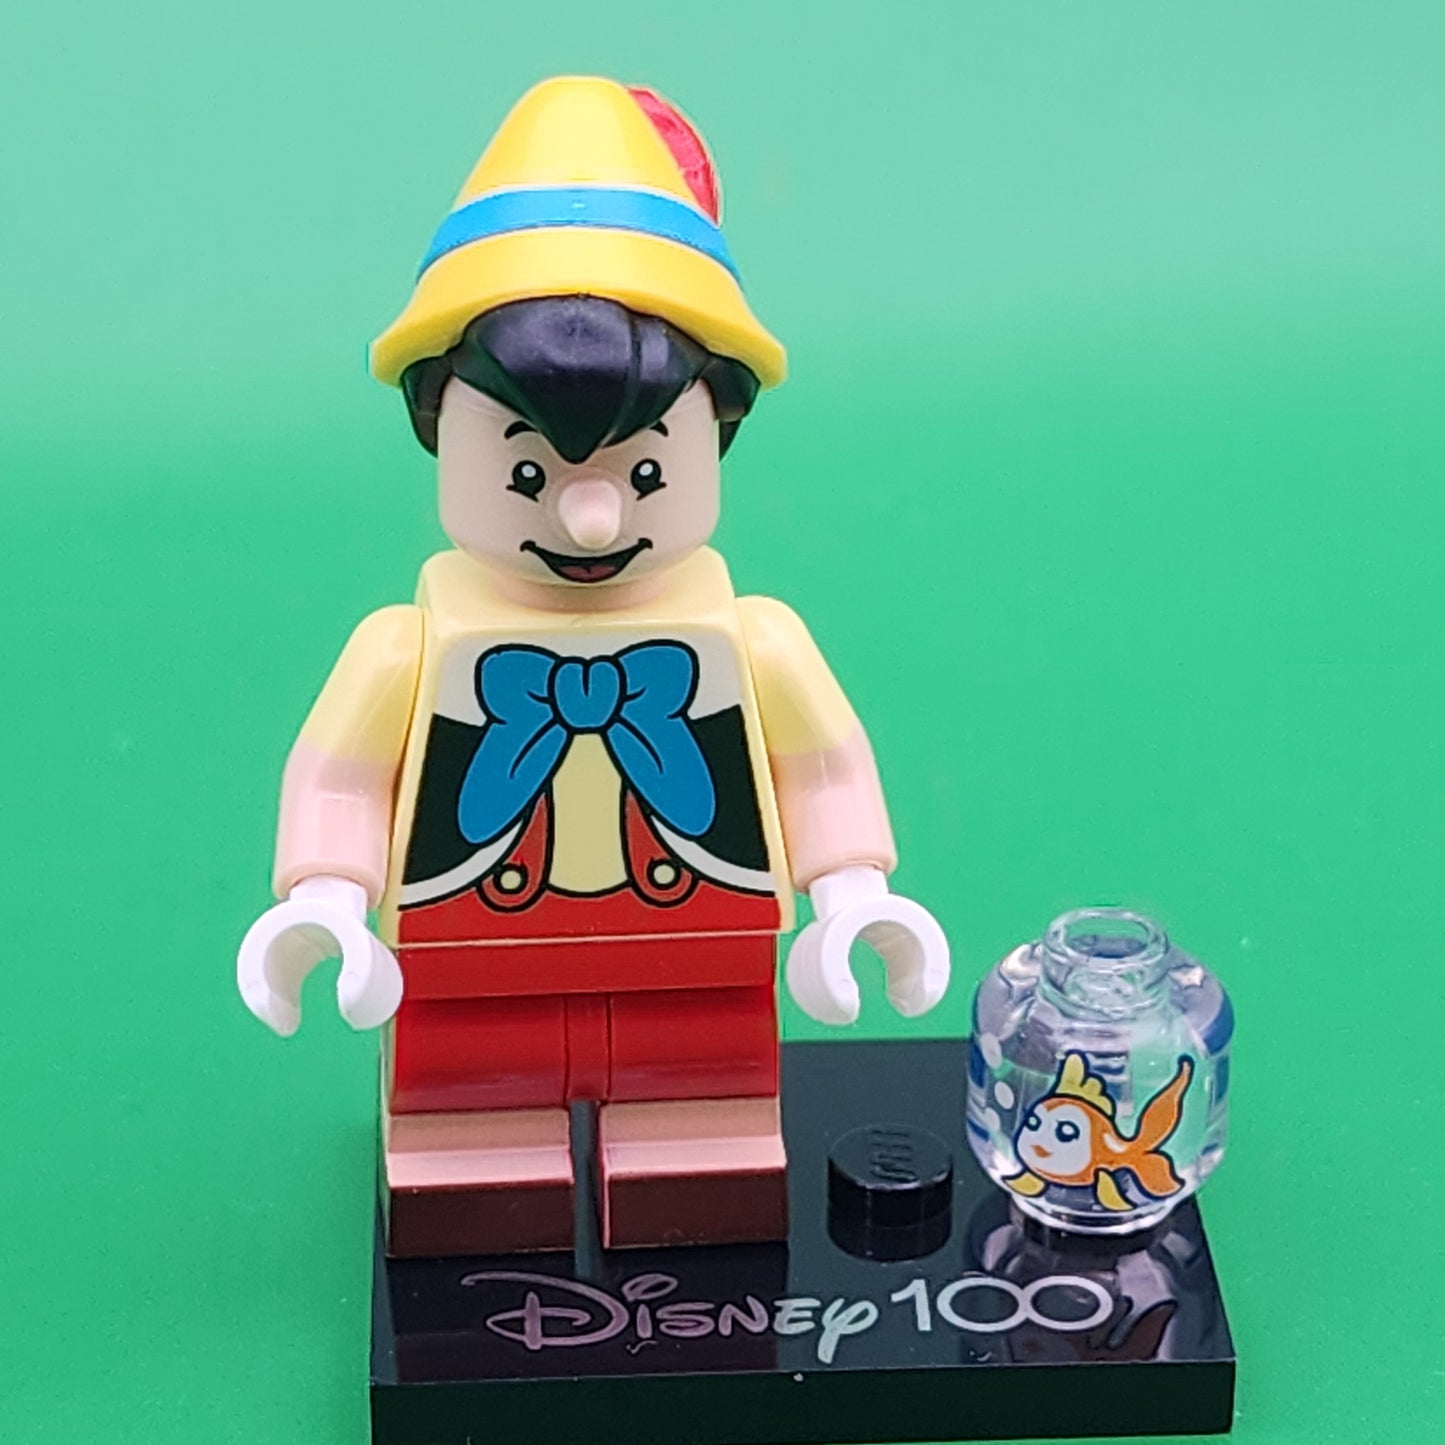 Lego Pinocchio Minifigure Disney 100 dis093 Fish Bowl Plate